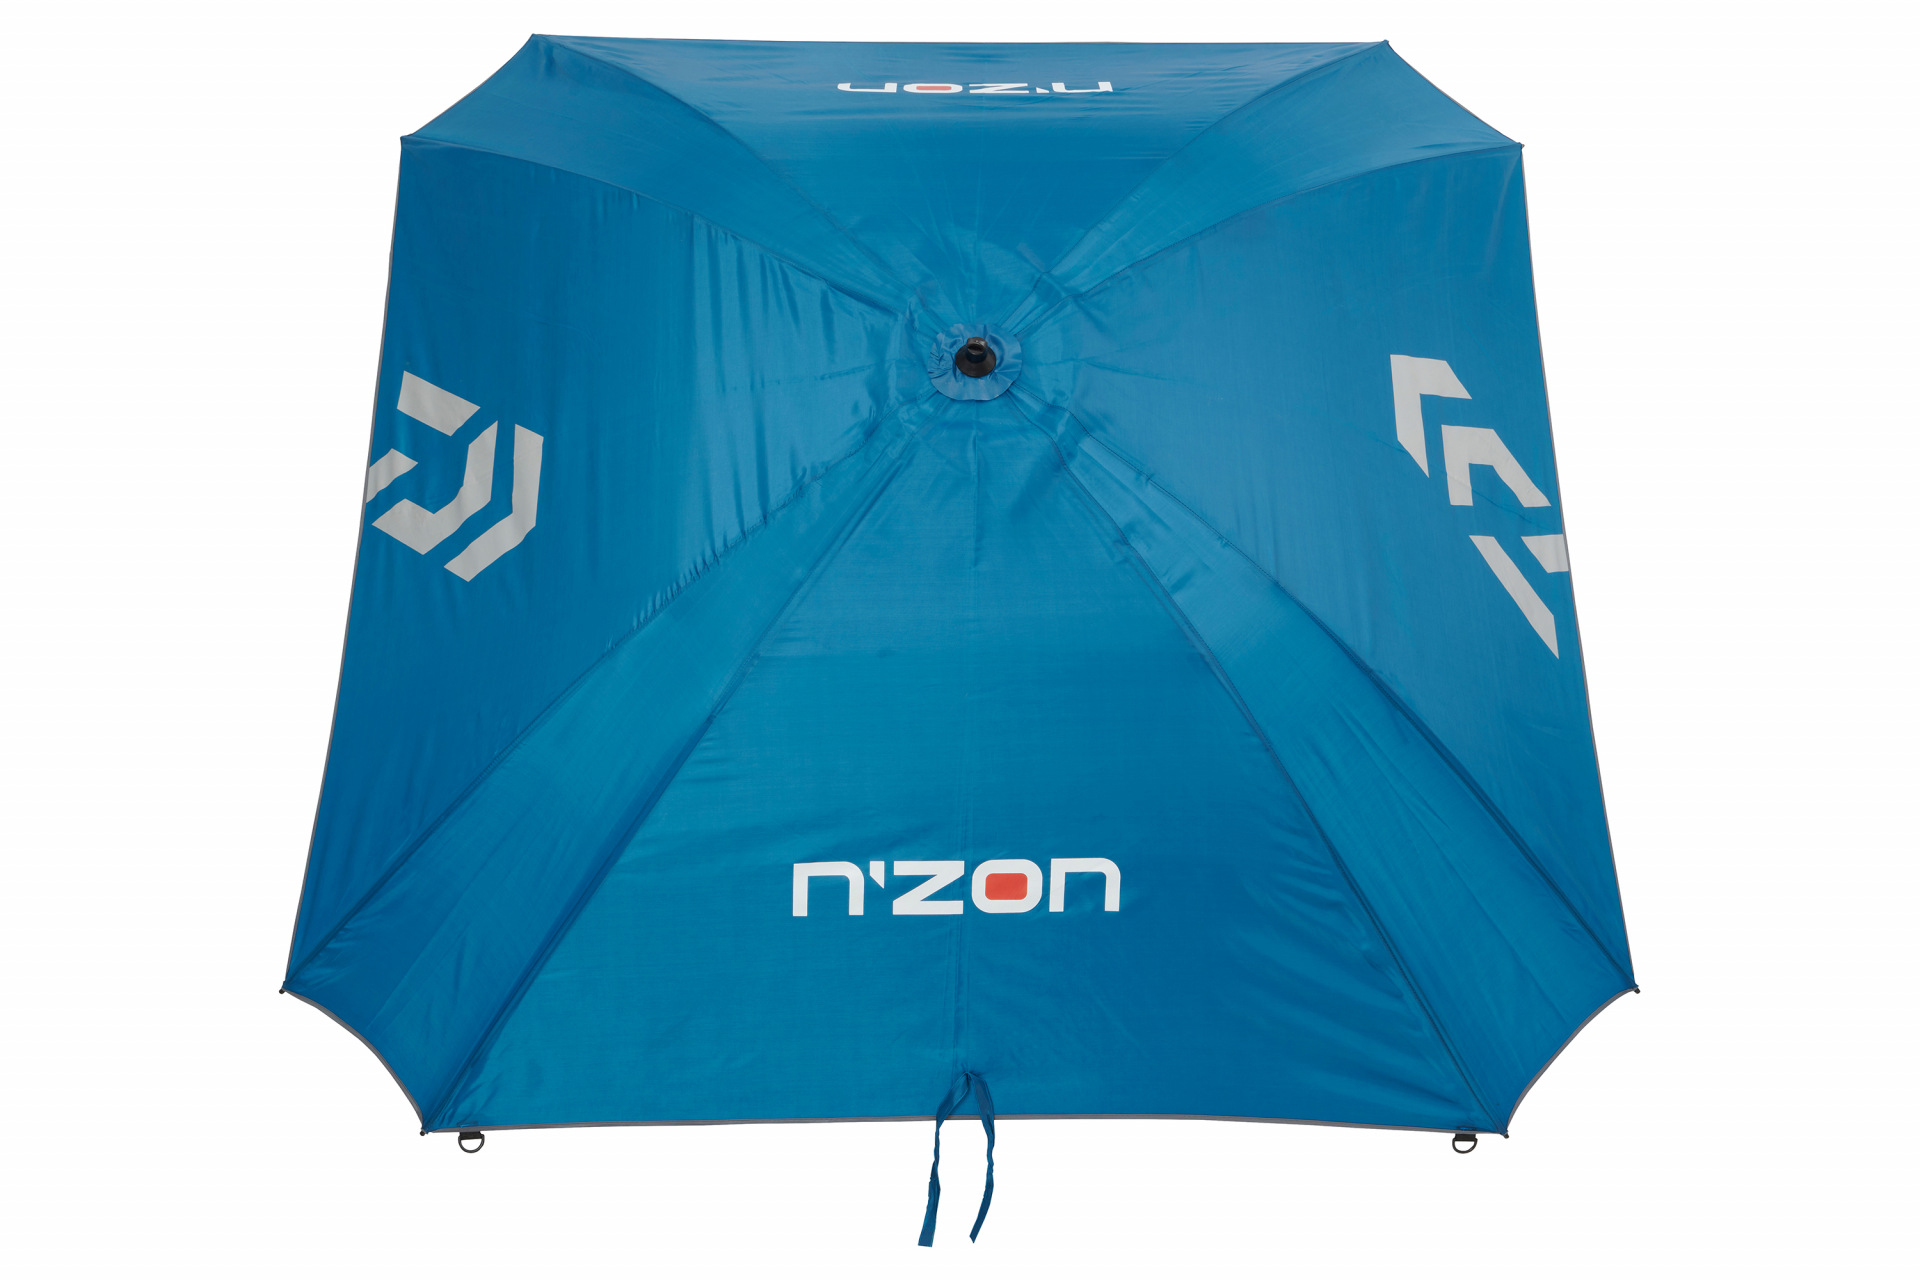 N'Zon Umbrella <span>| square | arc measure 250cm</span>